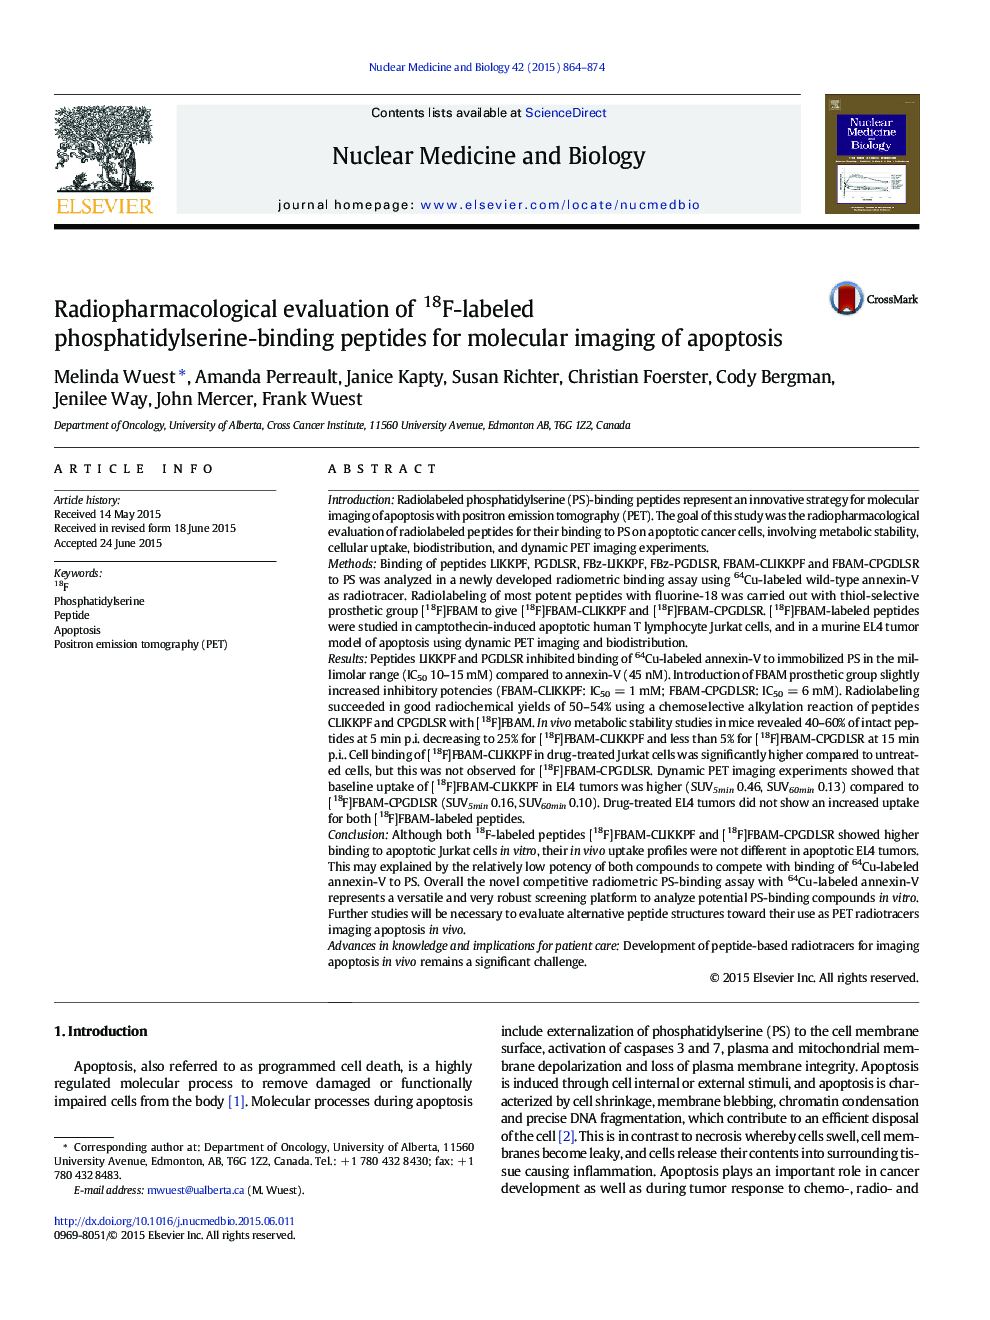 Radiopharmacological evaluation of 18F-labeled phosphatidylserine-binding peptides for molecular imaging of apoptosis